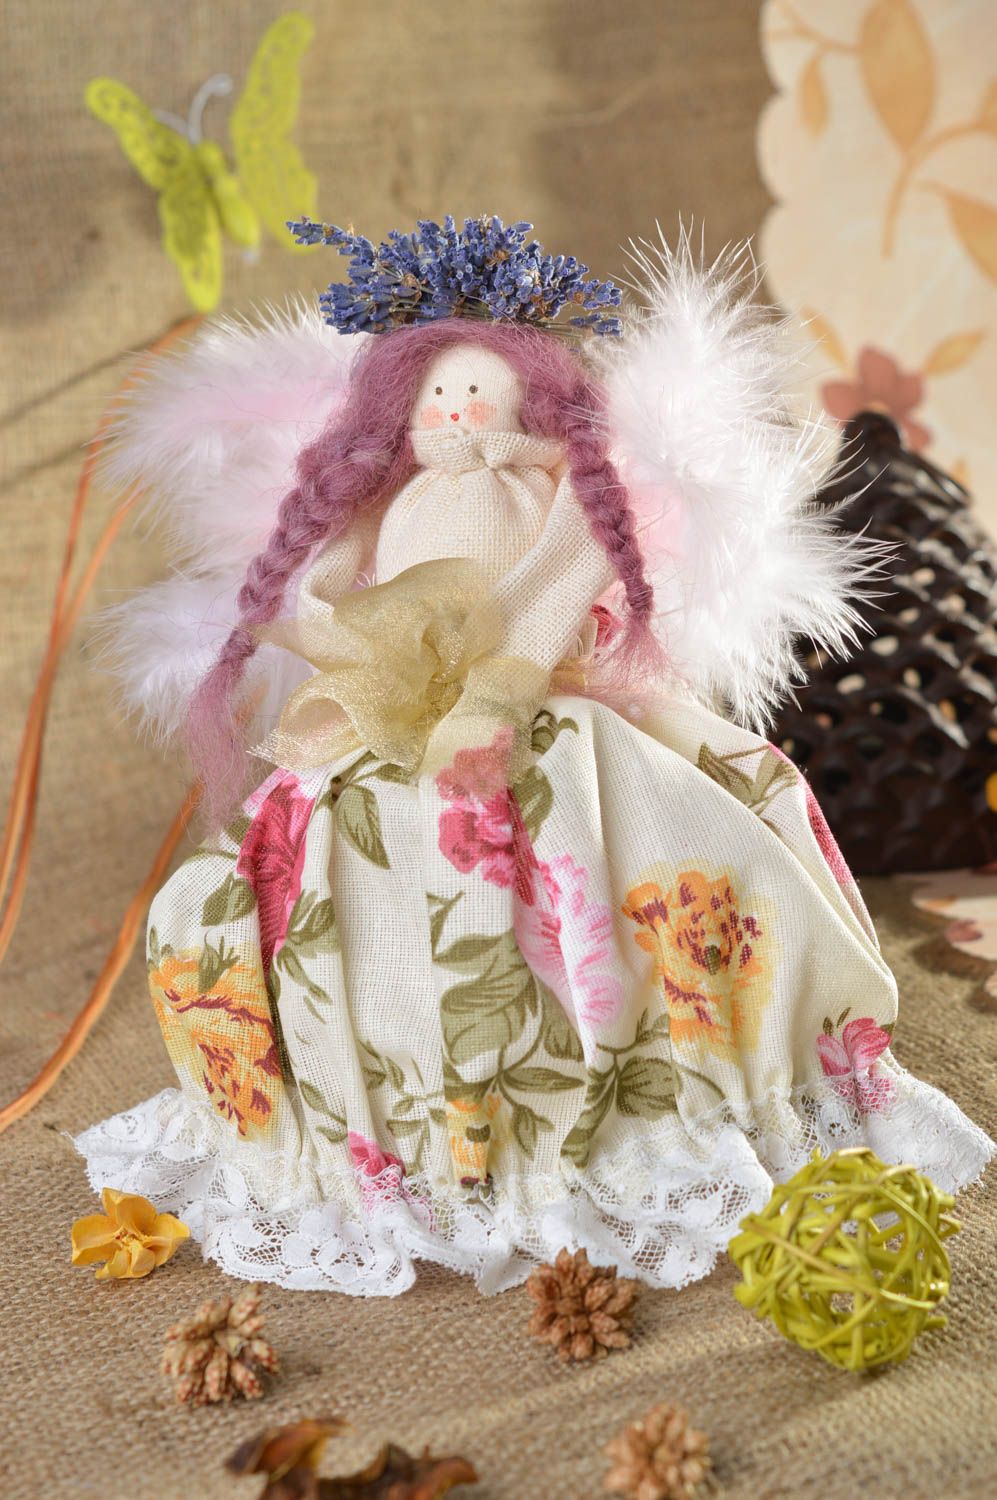 Handmade doll stuffed interior toy designer doll present for children home ideas photo 1